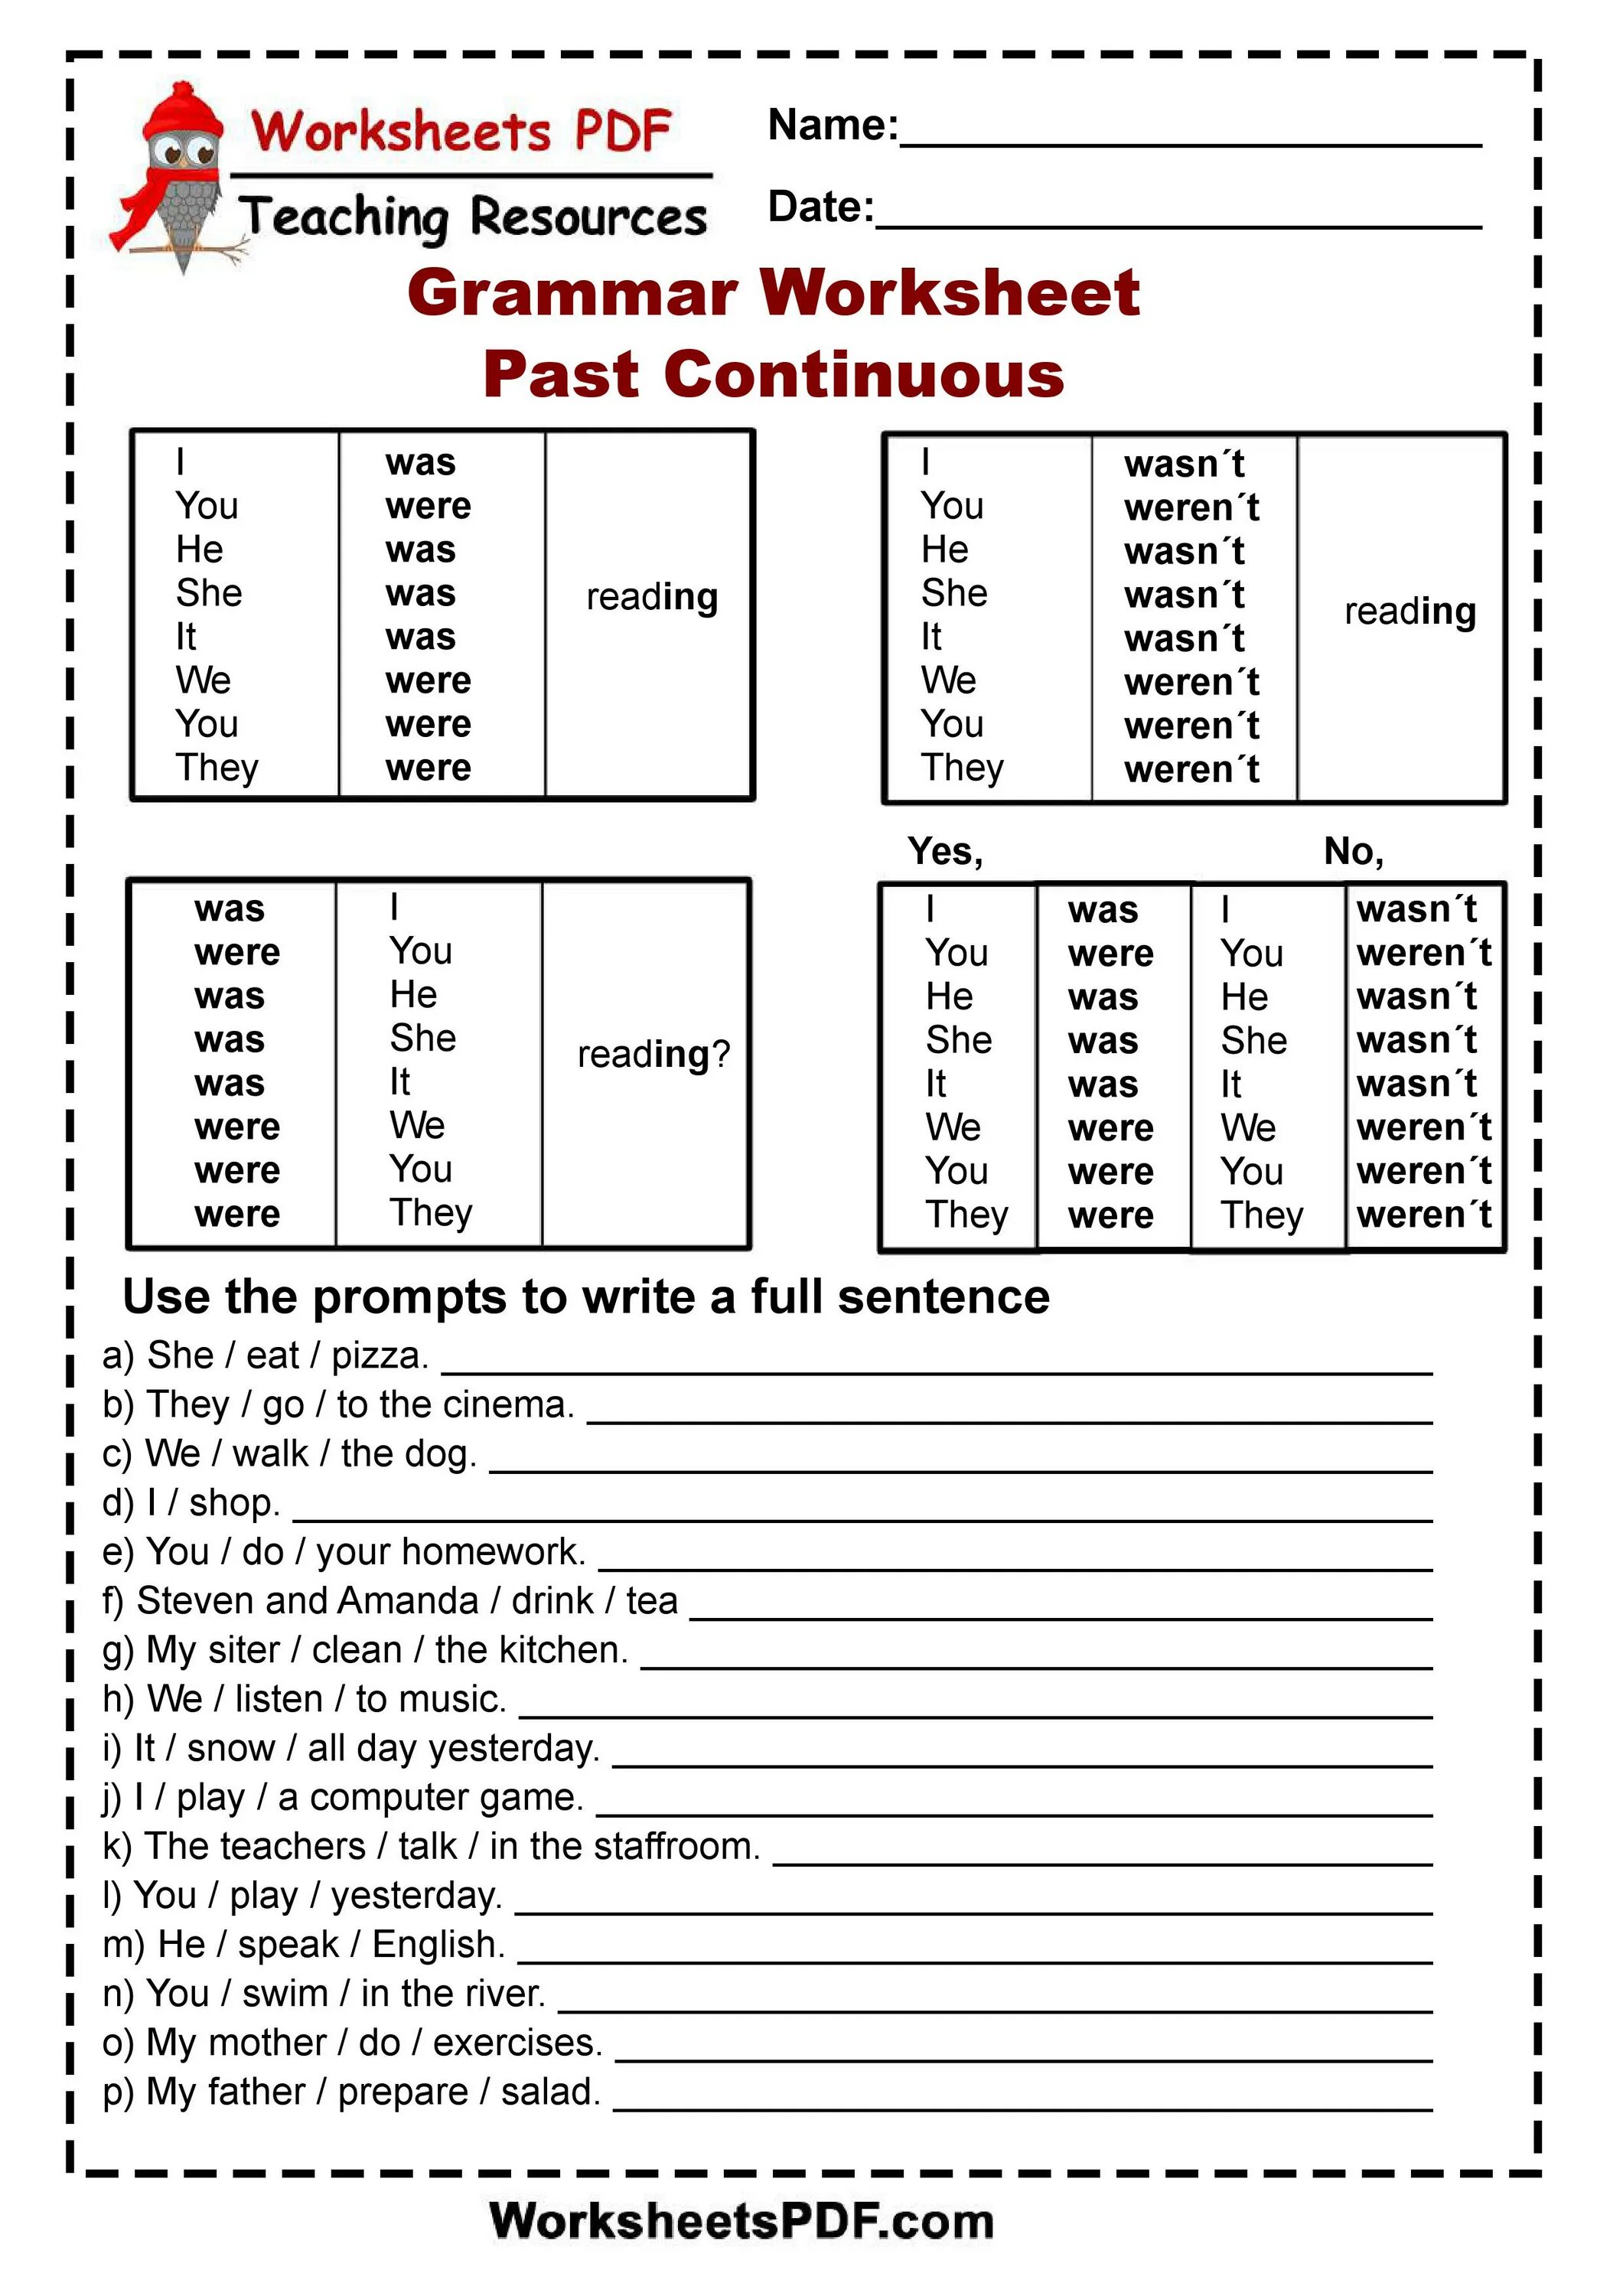 Past simple past continuous exercise pdf. Паст континиус Worksheets. Past Continuous упражнения. Past Continuous вопросы упражнения. Past Continuous упражнения pdf.